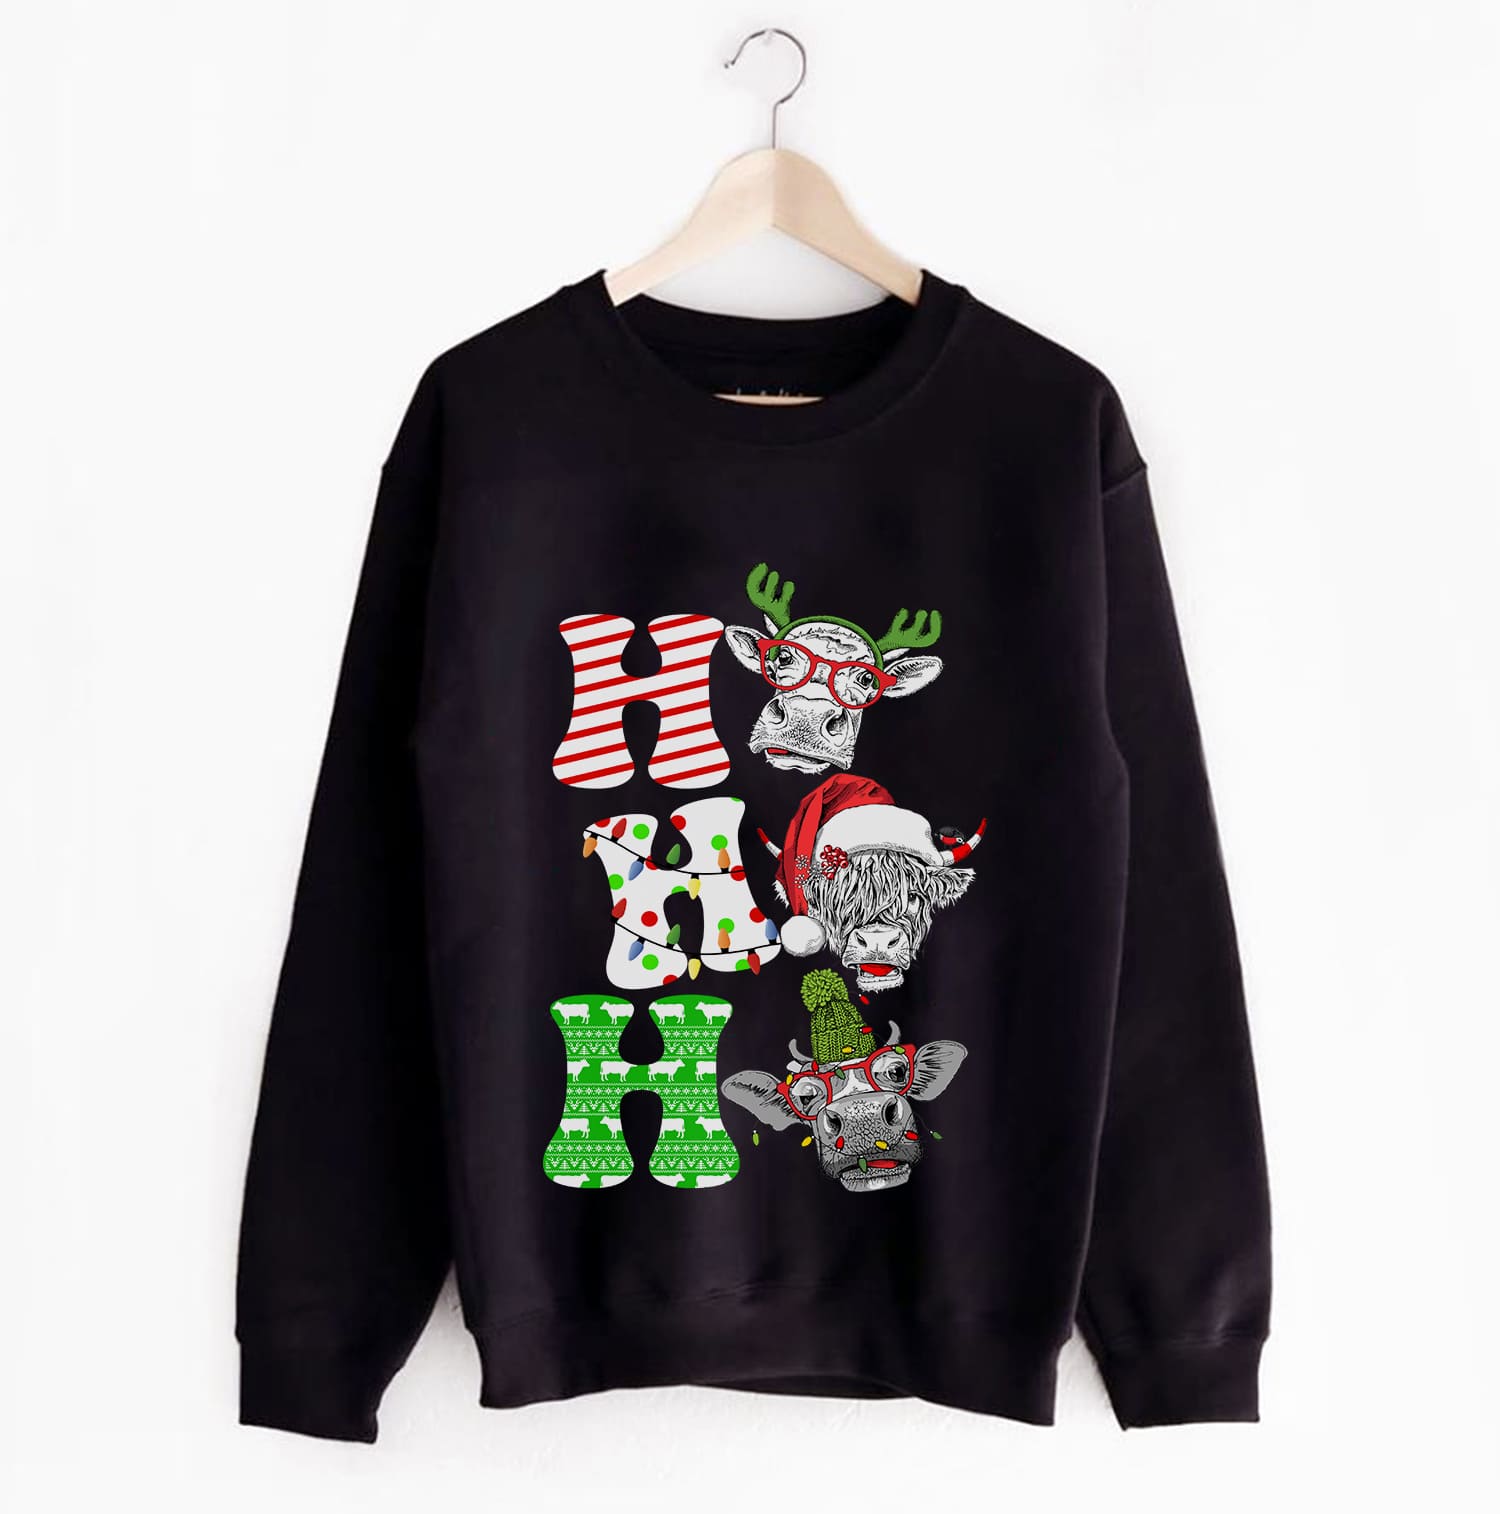 Ho ho ho - Santa Claus hat, Funny cow graphic T-shirt